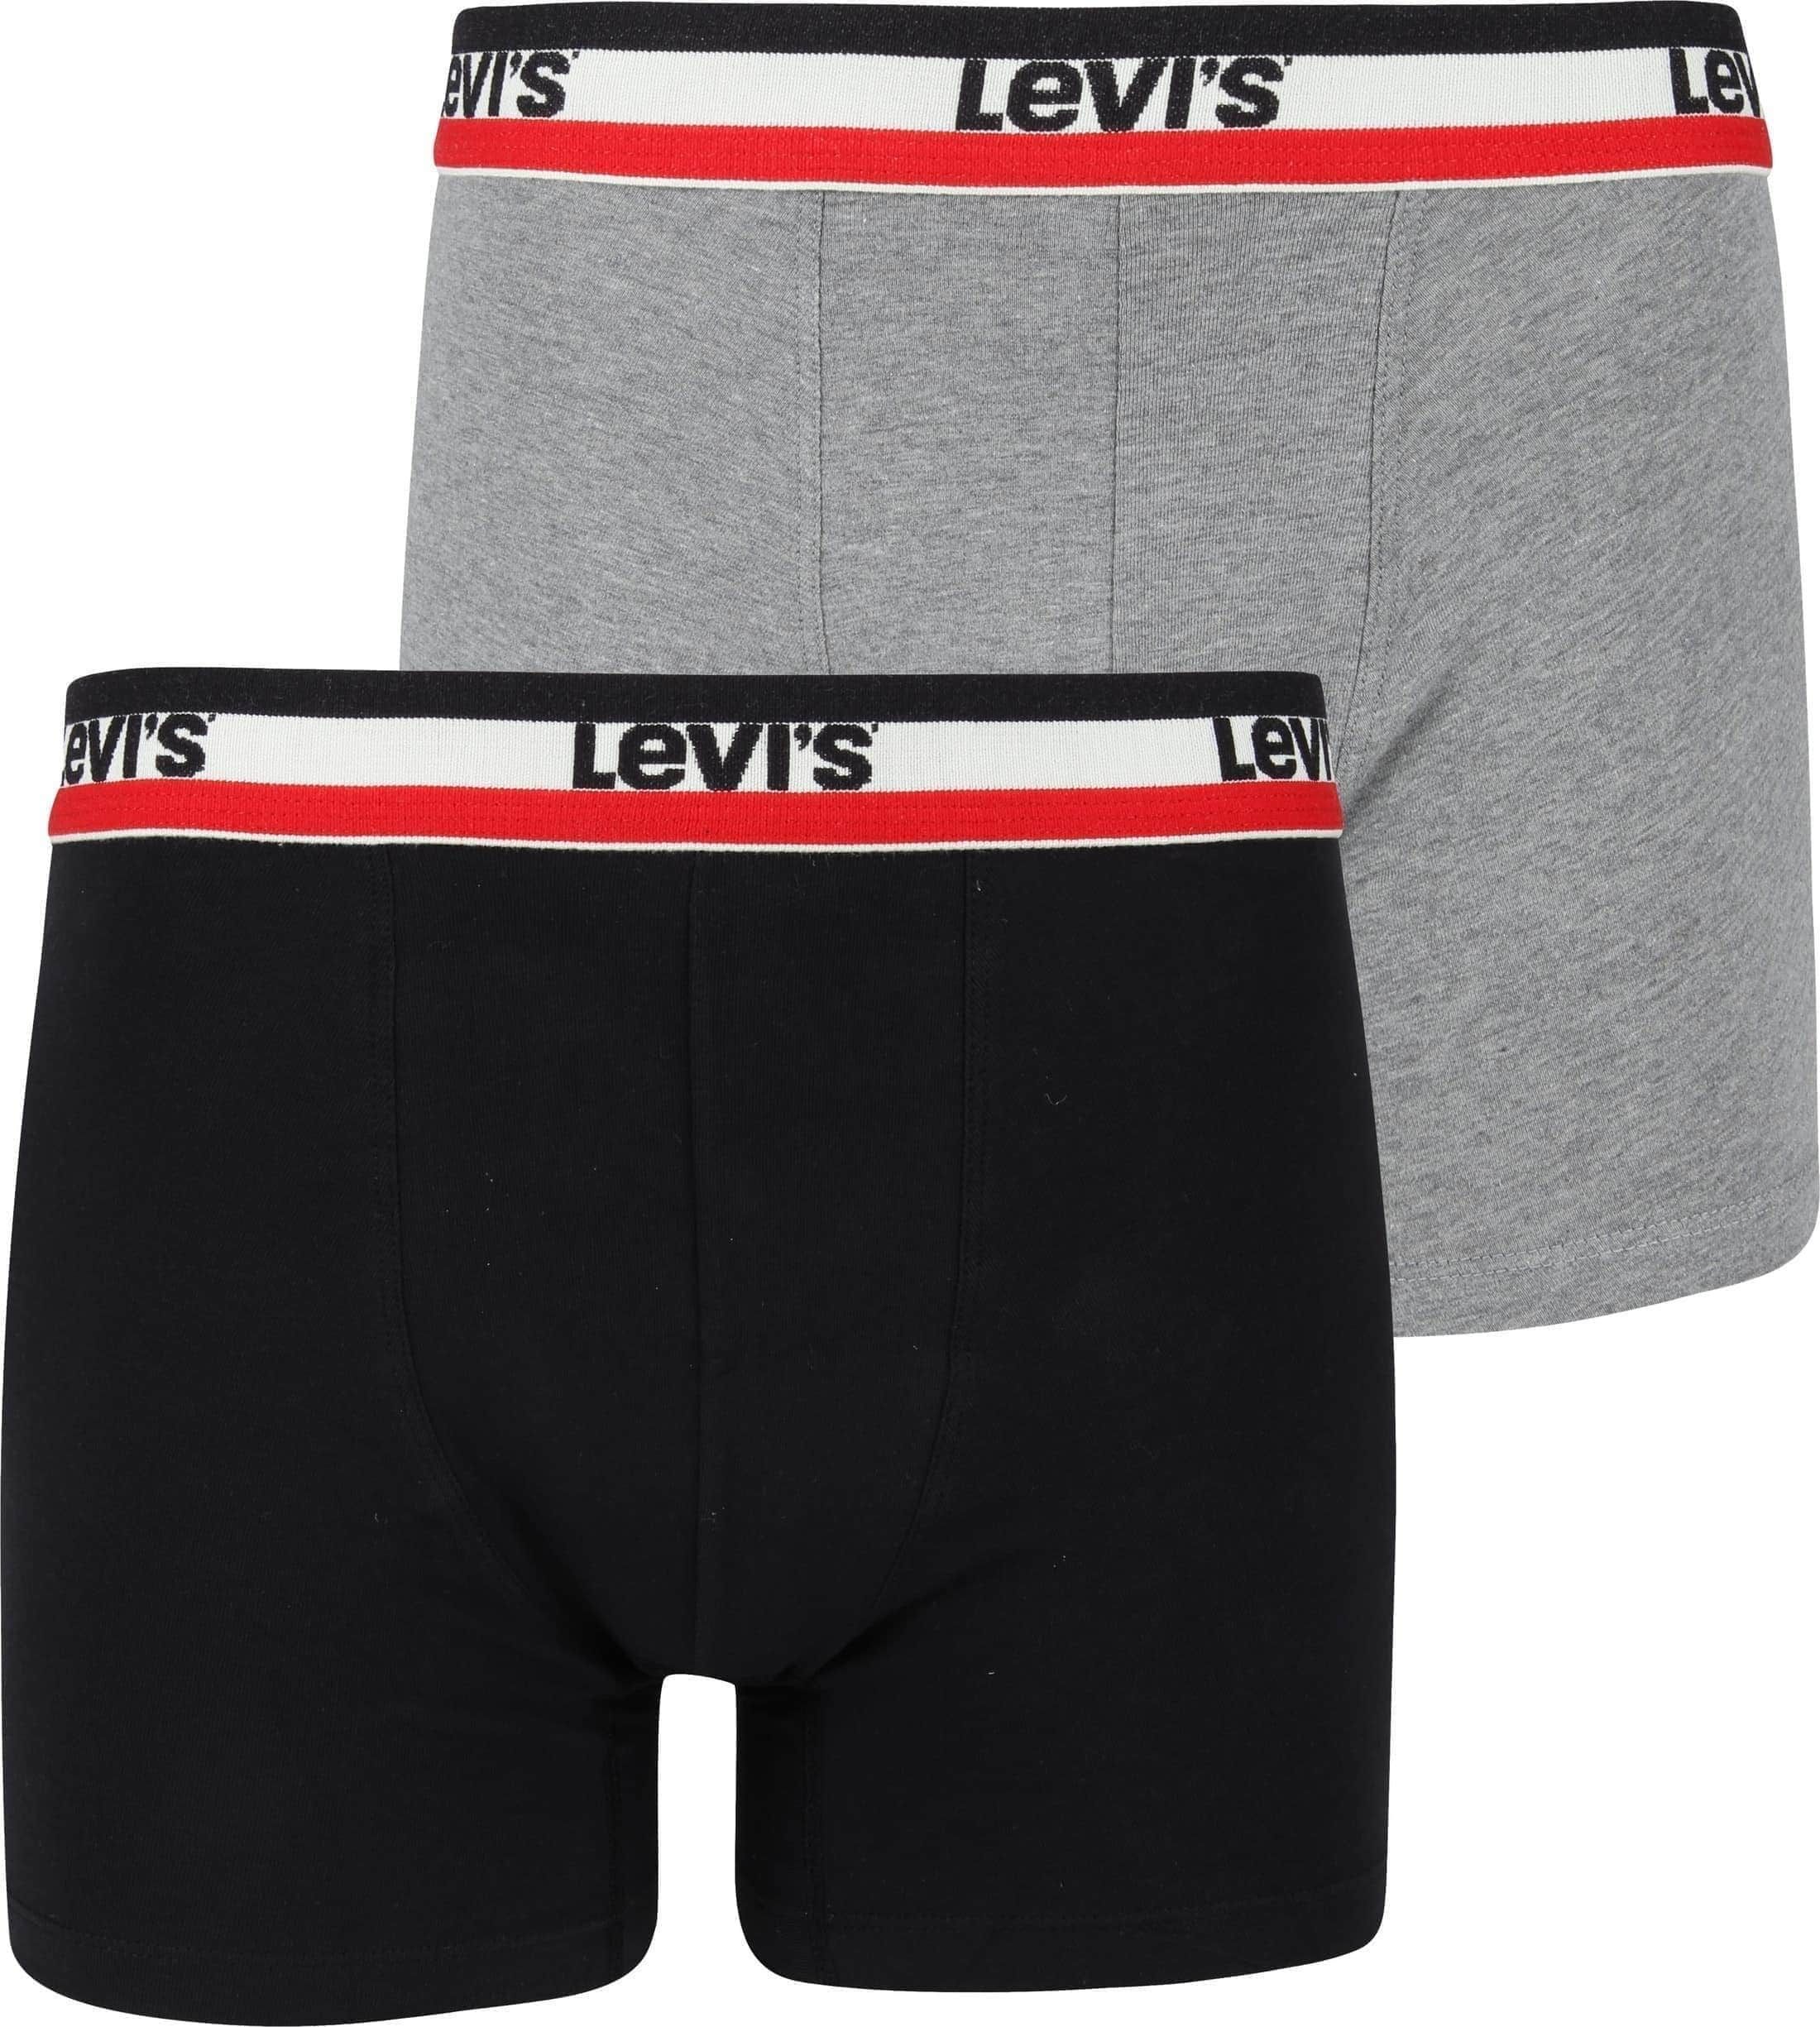 Levi's Boxer Shorts 2-Pack Grey Black size L